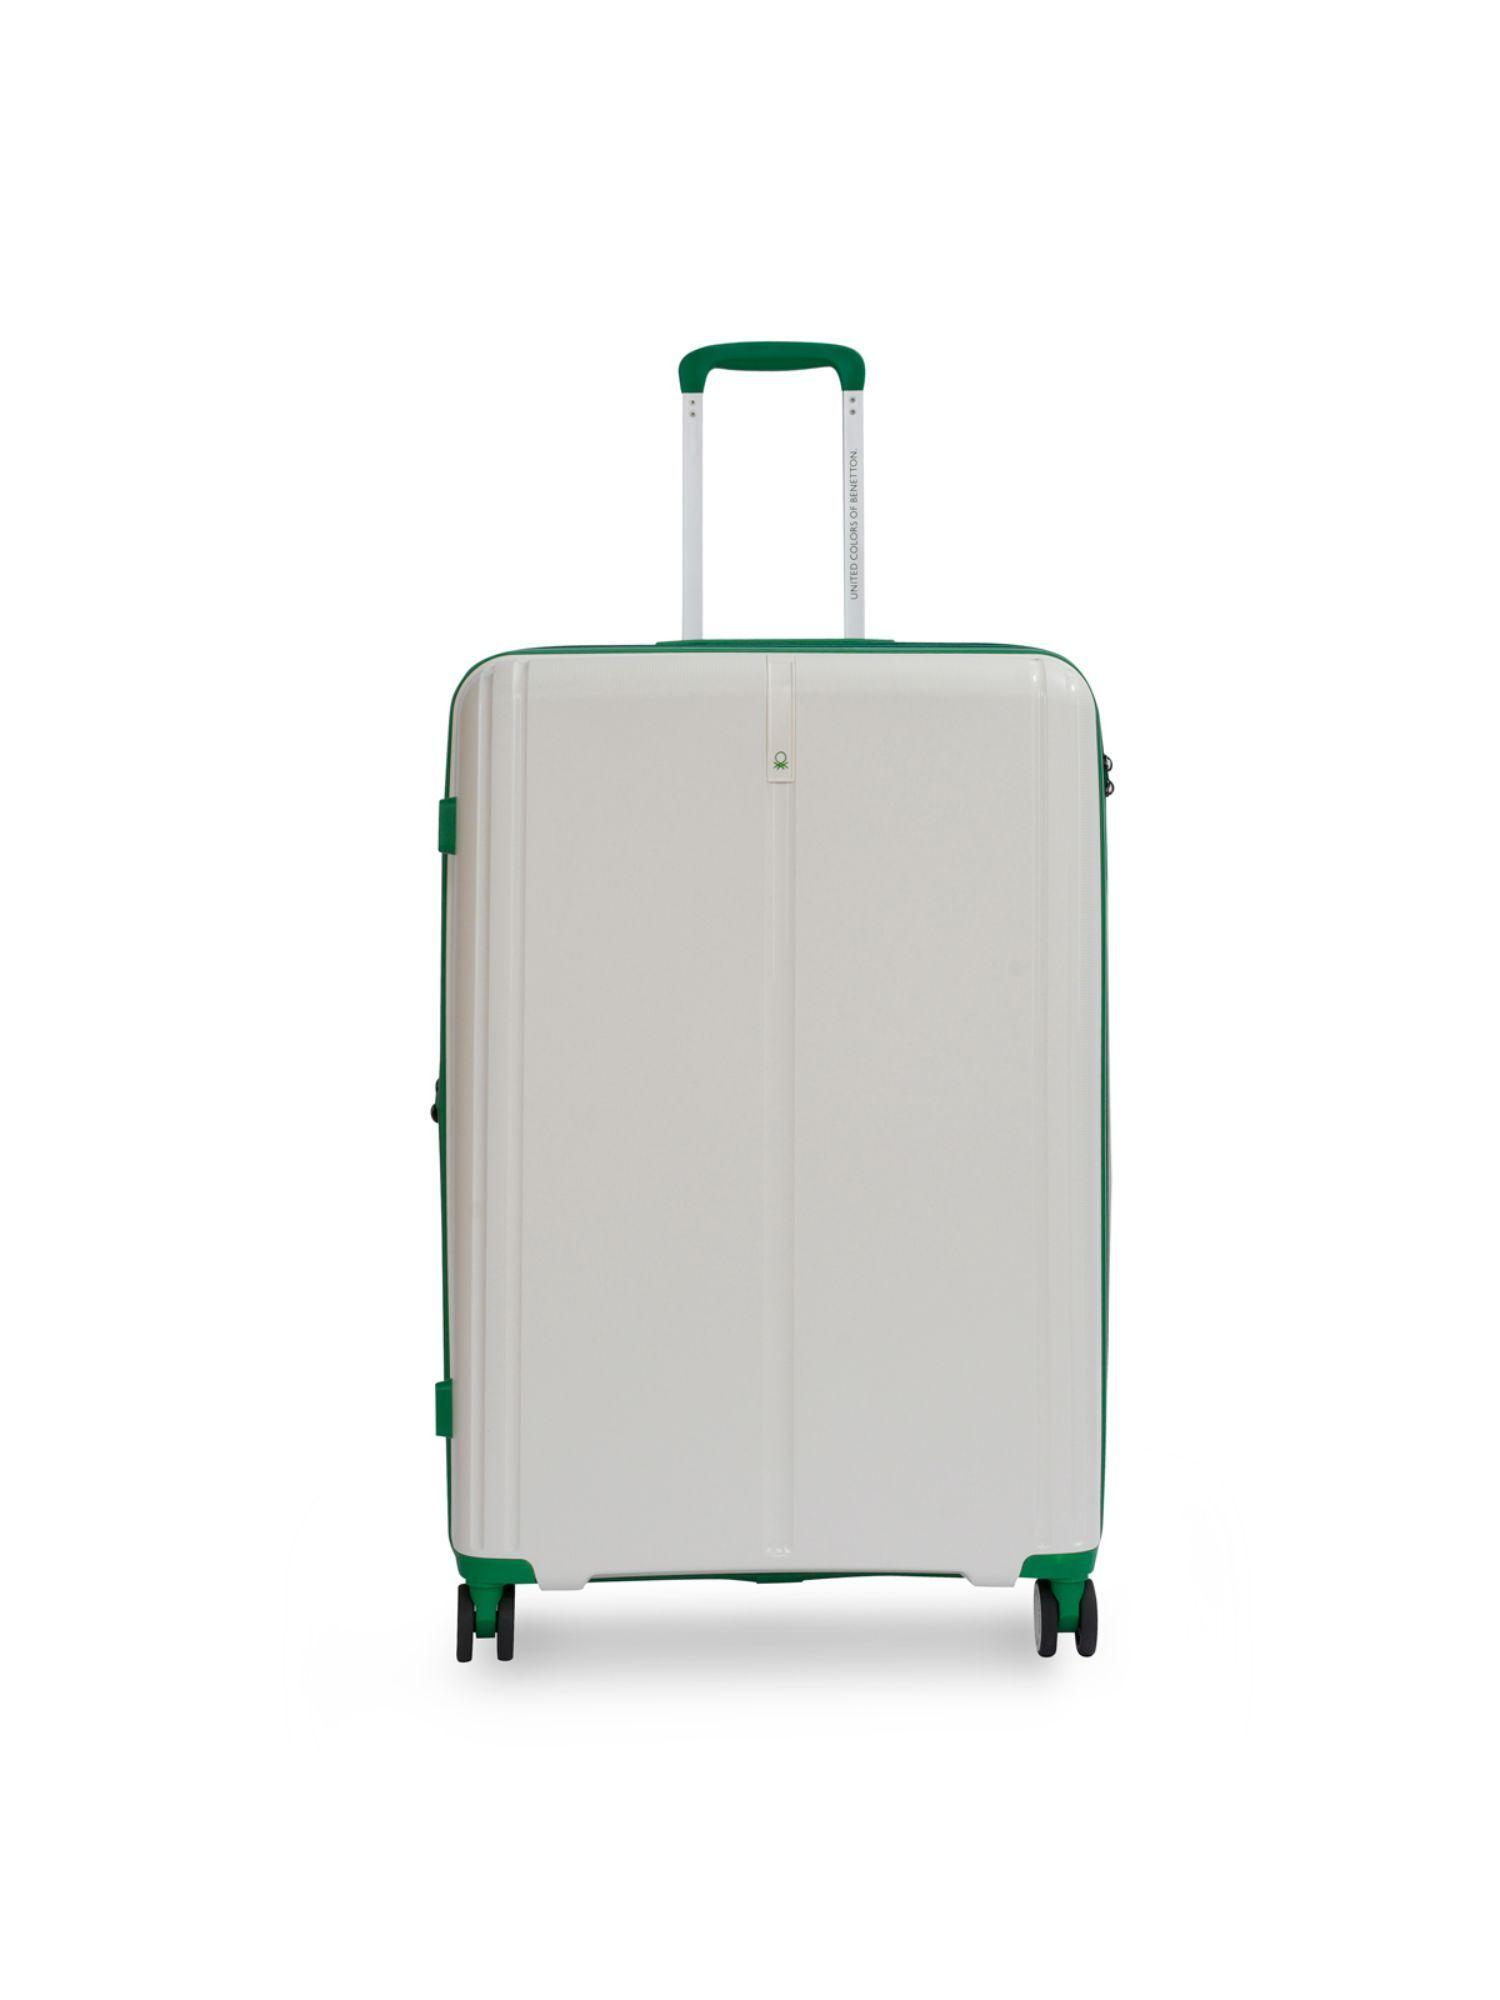 emerald unisex hard luggage white tsa lock trolley bag